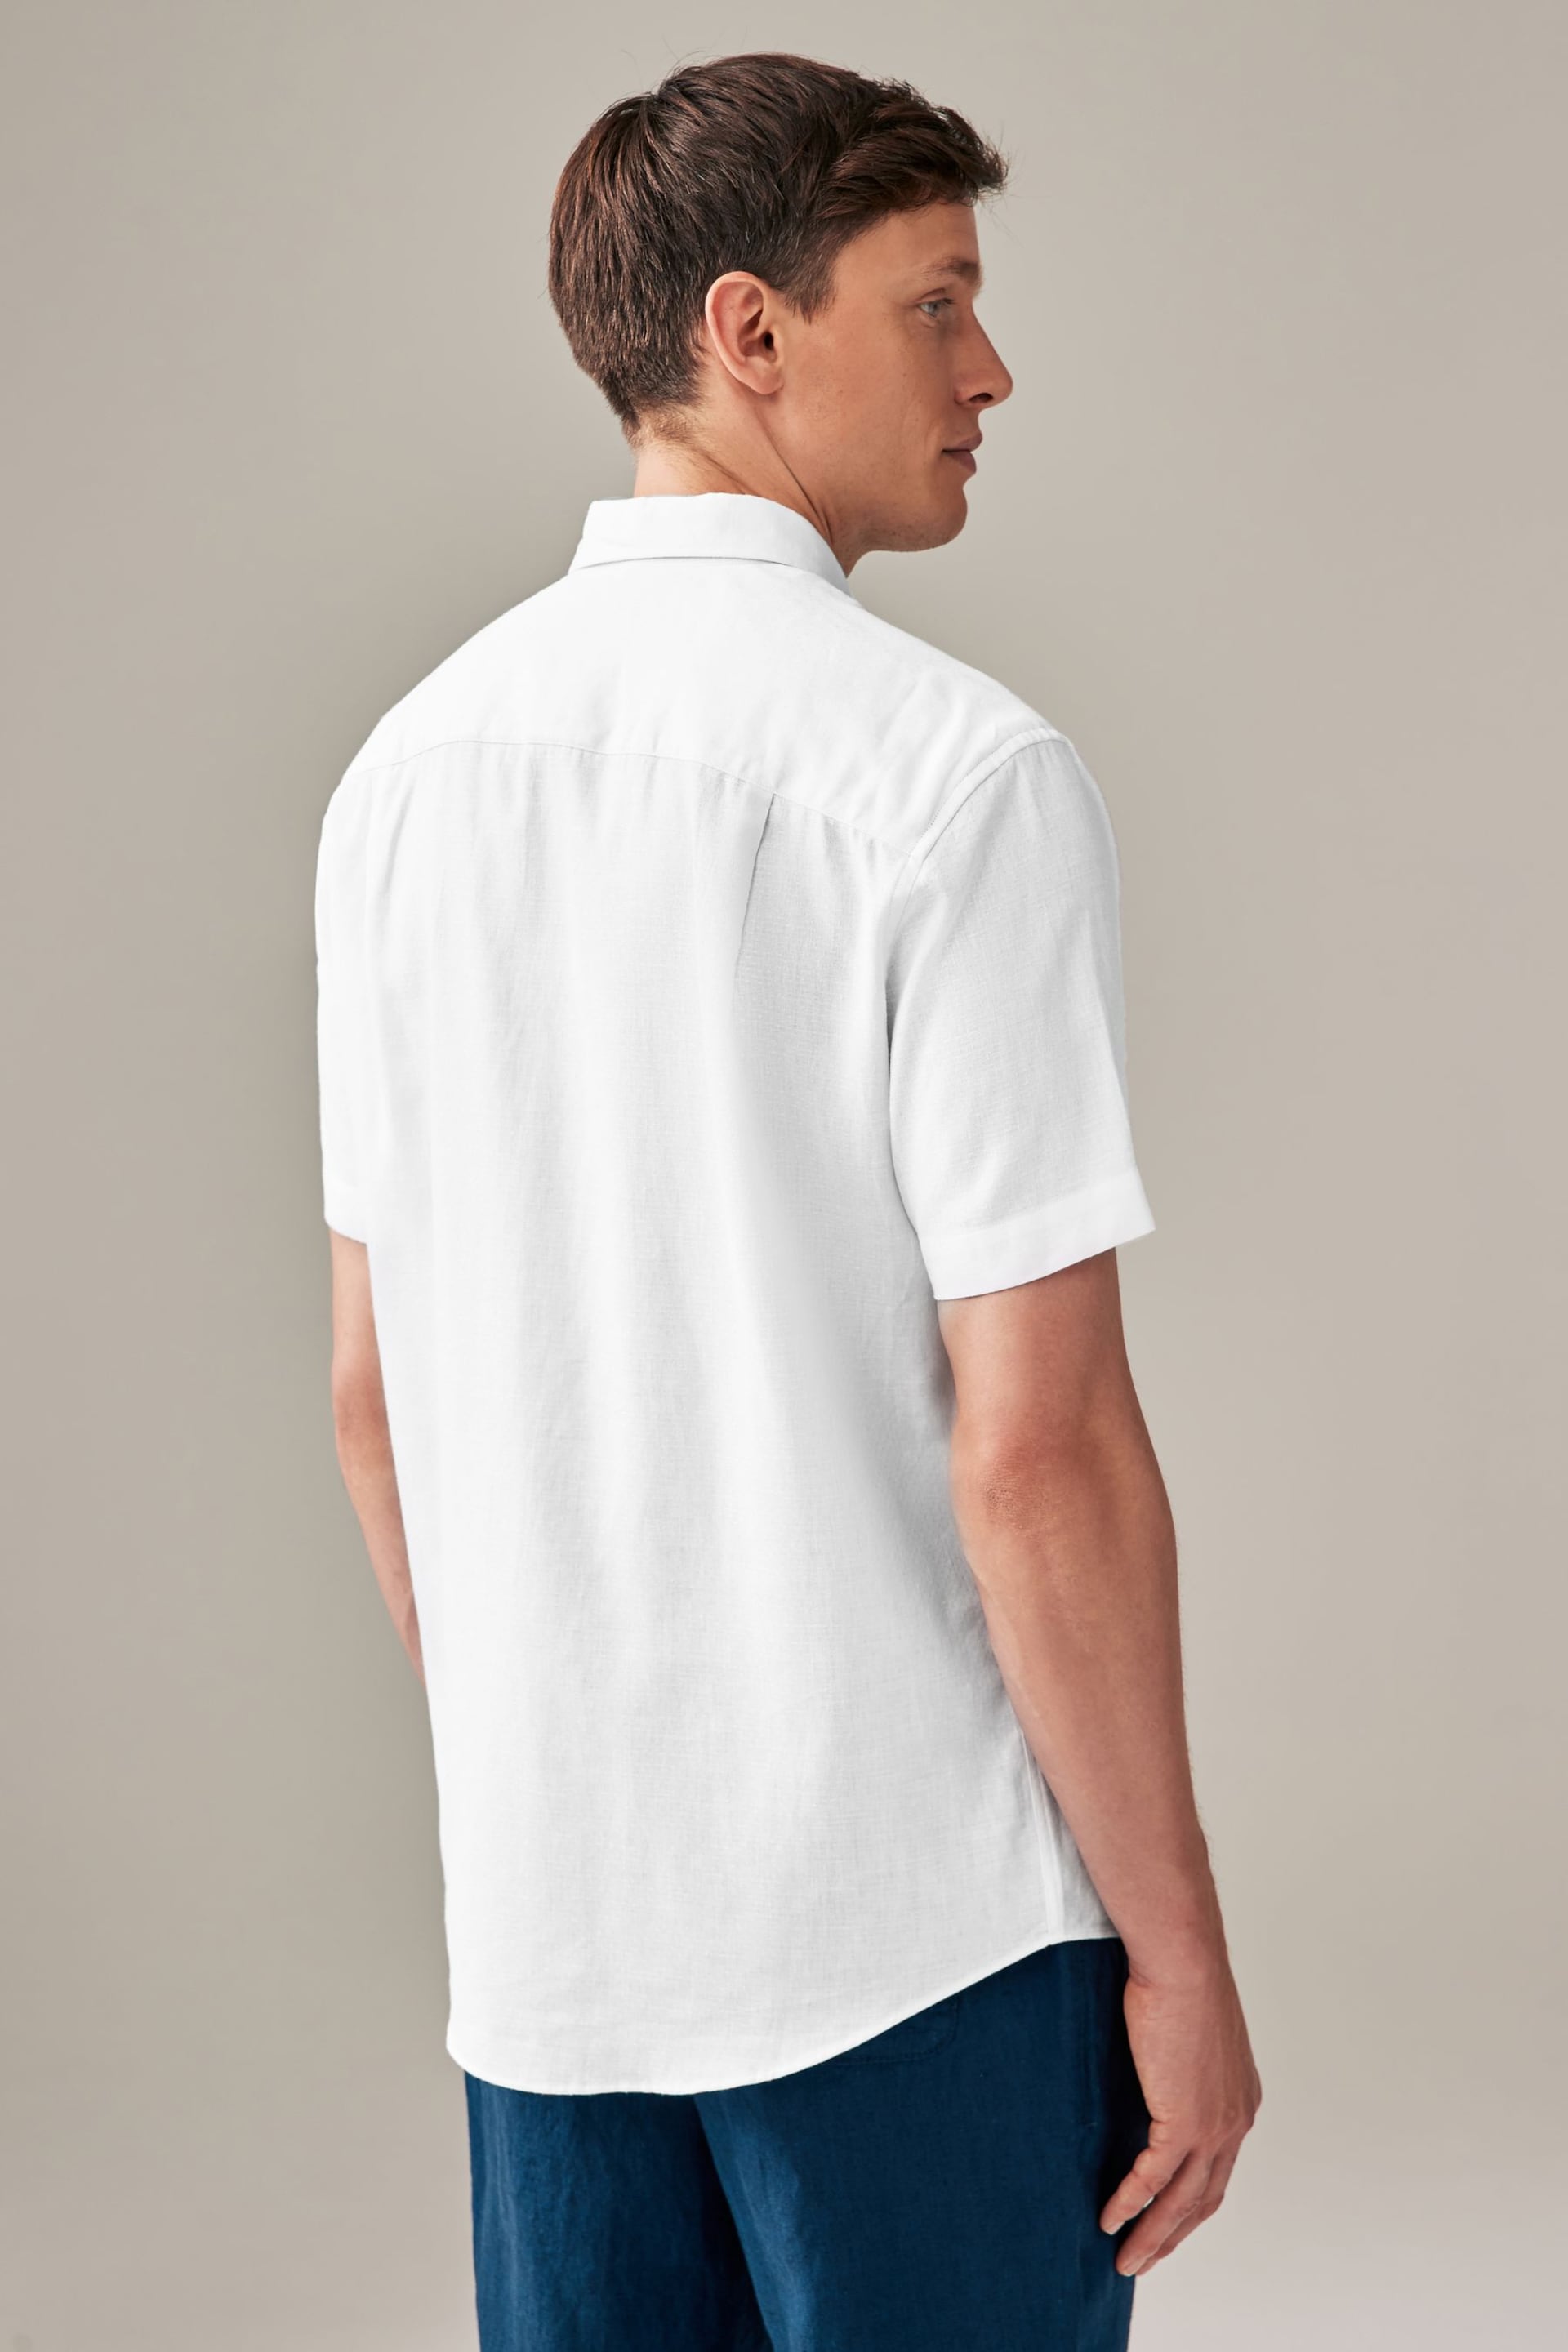 White Textured Linen Blend Shirt - Image 3 of 7